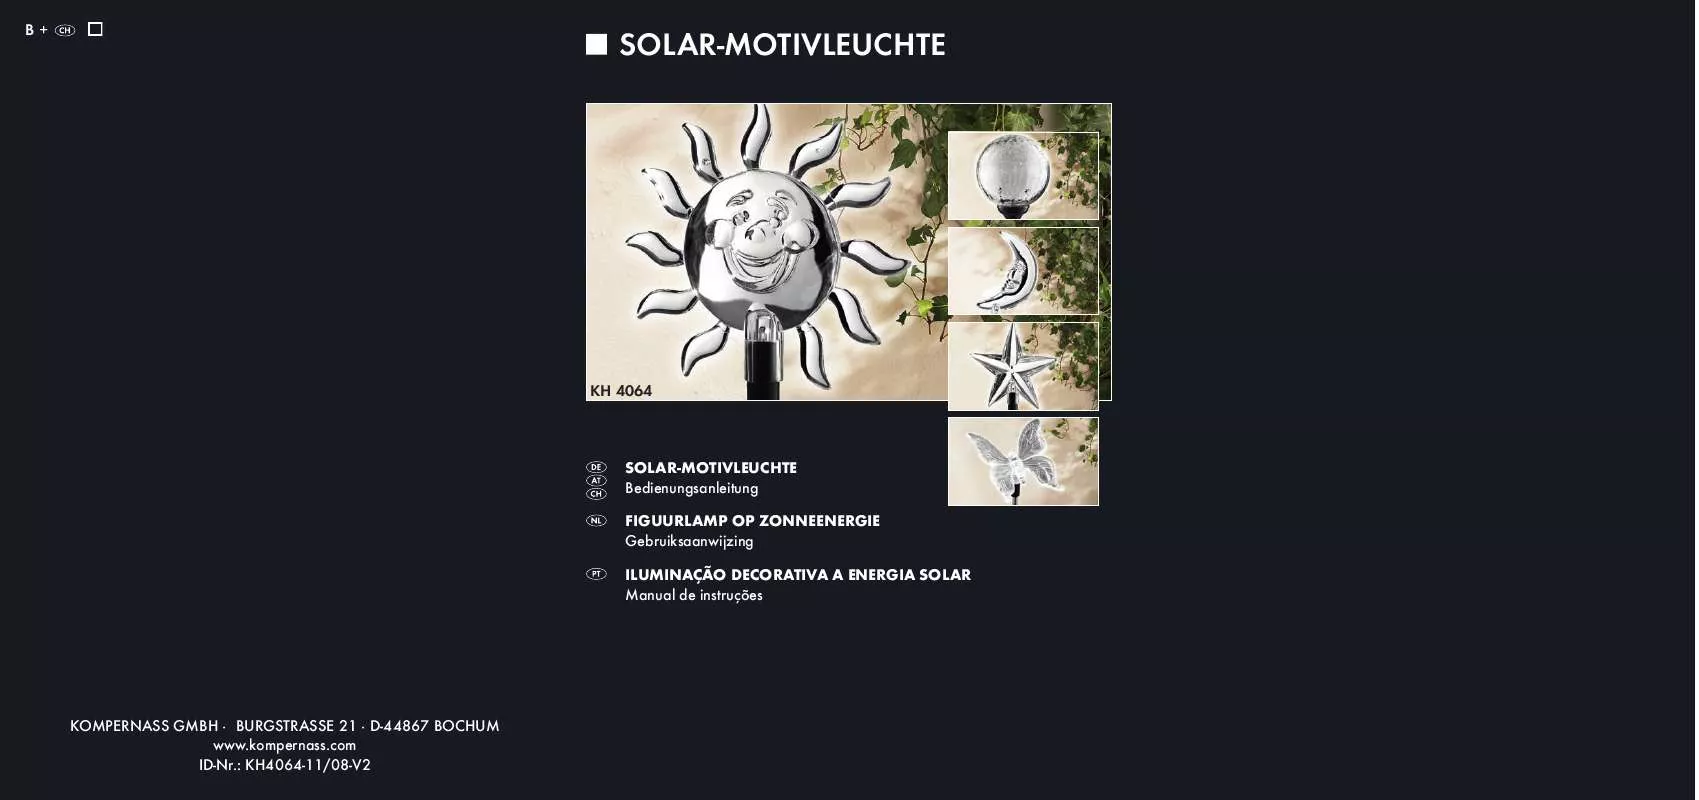 Mode d'emploi KOMPERNASS KH 4064 DECORATIVE SOLAR LIGHT